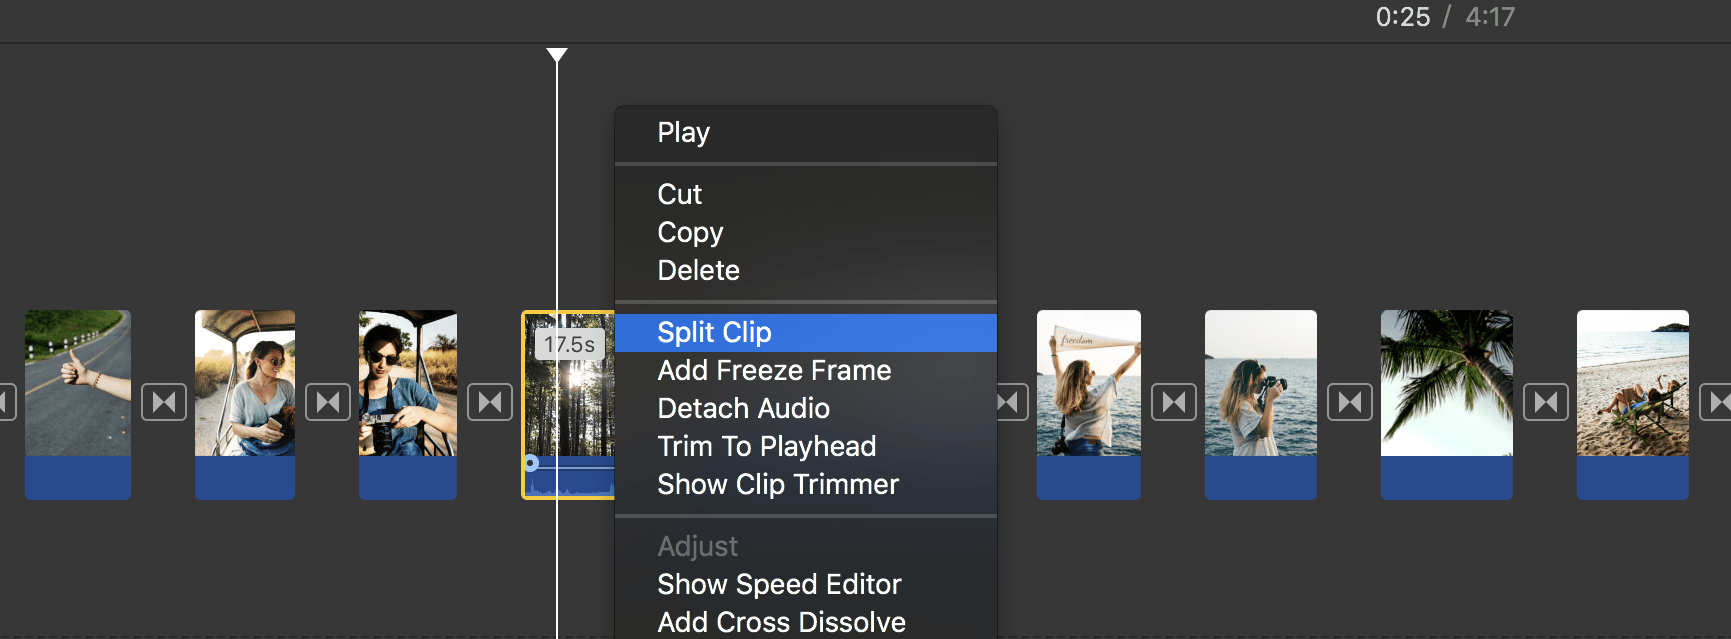 how to split a video on imovie mac